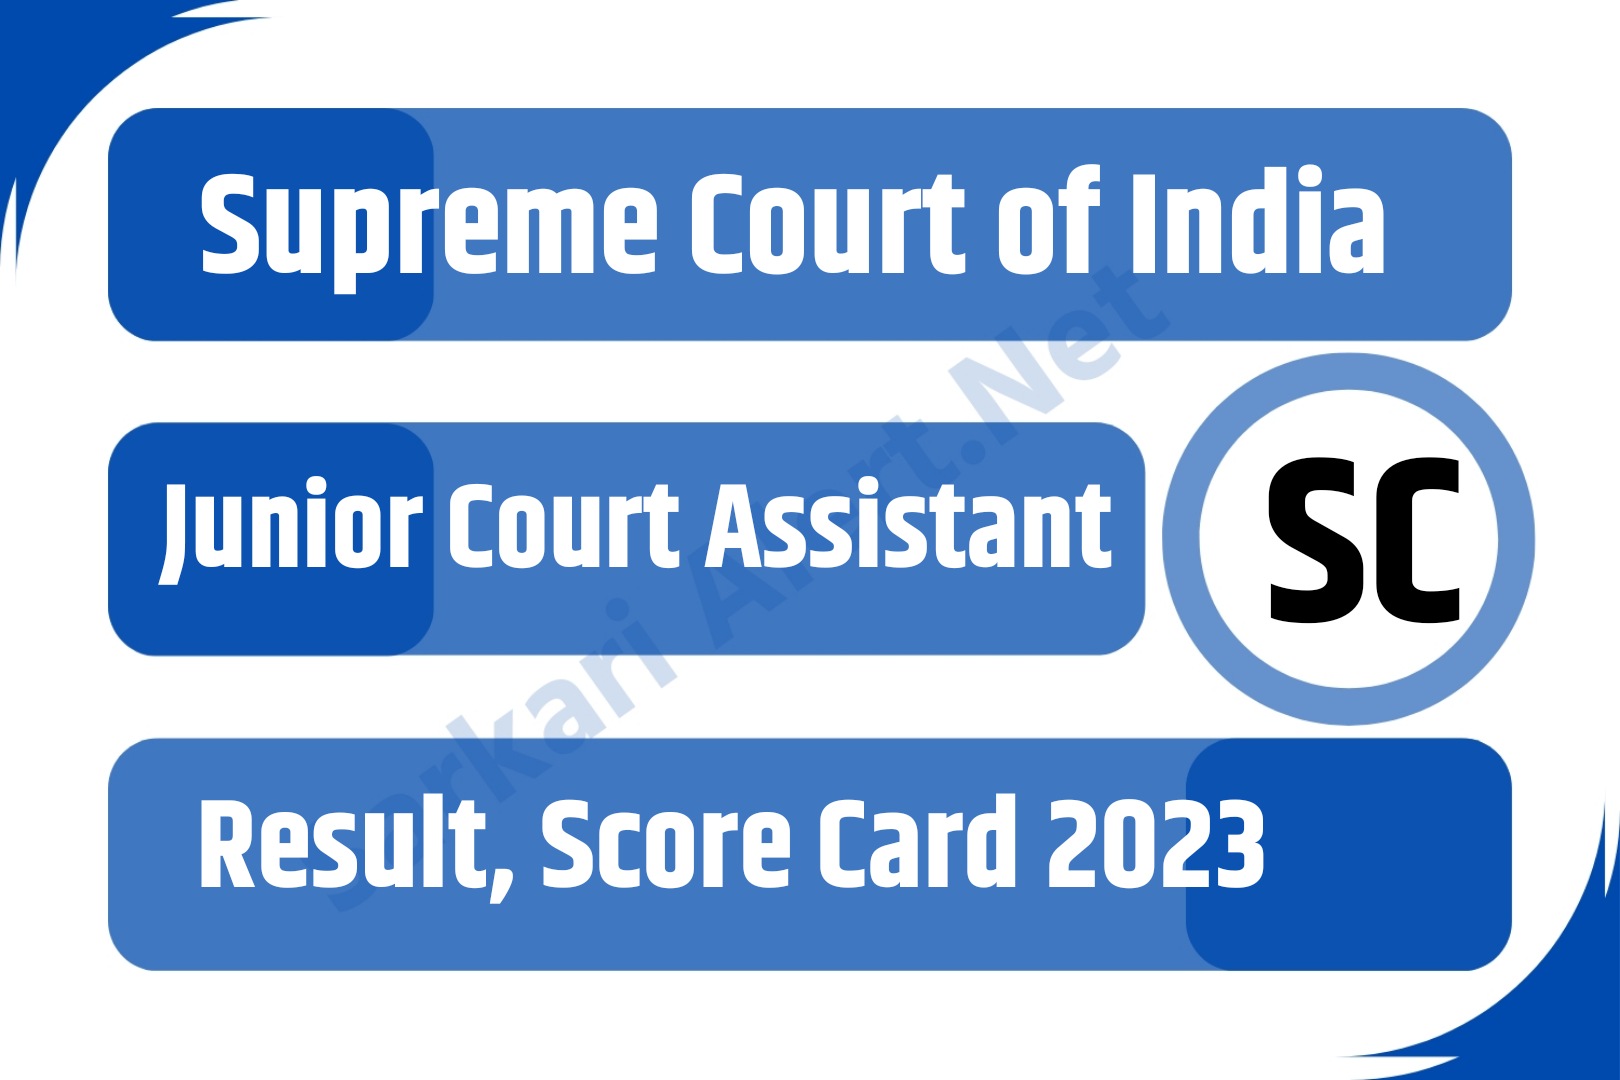 Supreme Court of India Junior Court Assistant Result, Score Card 2023